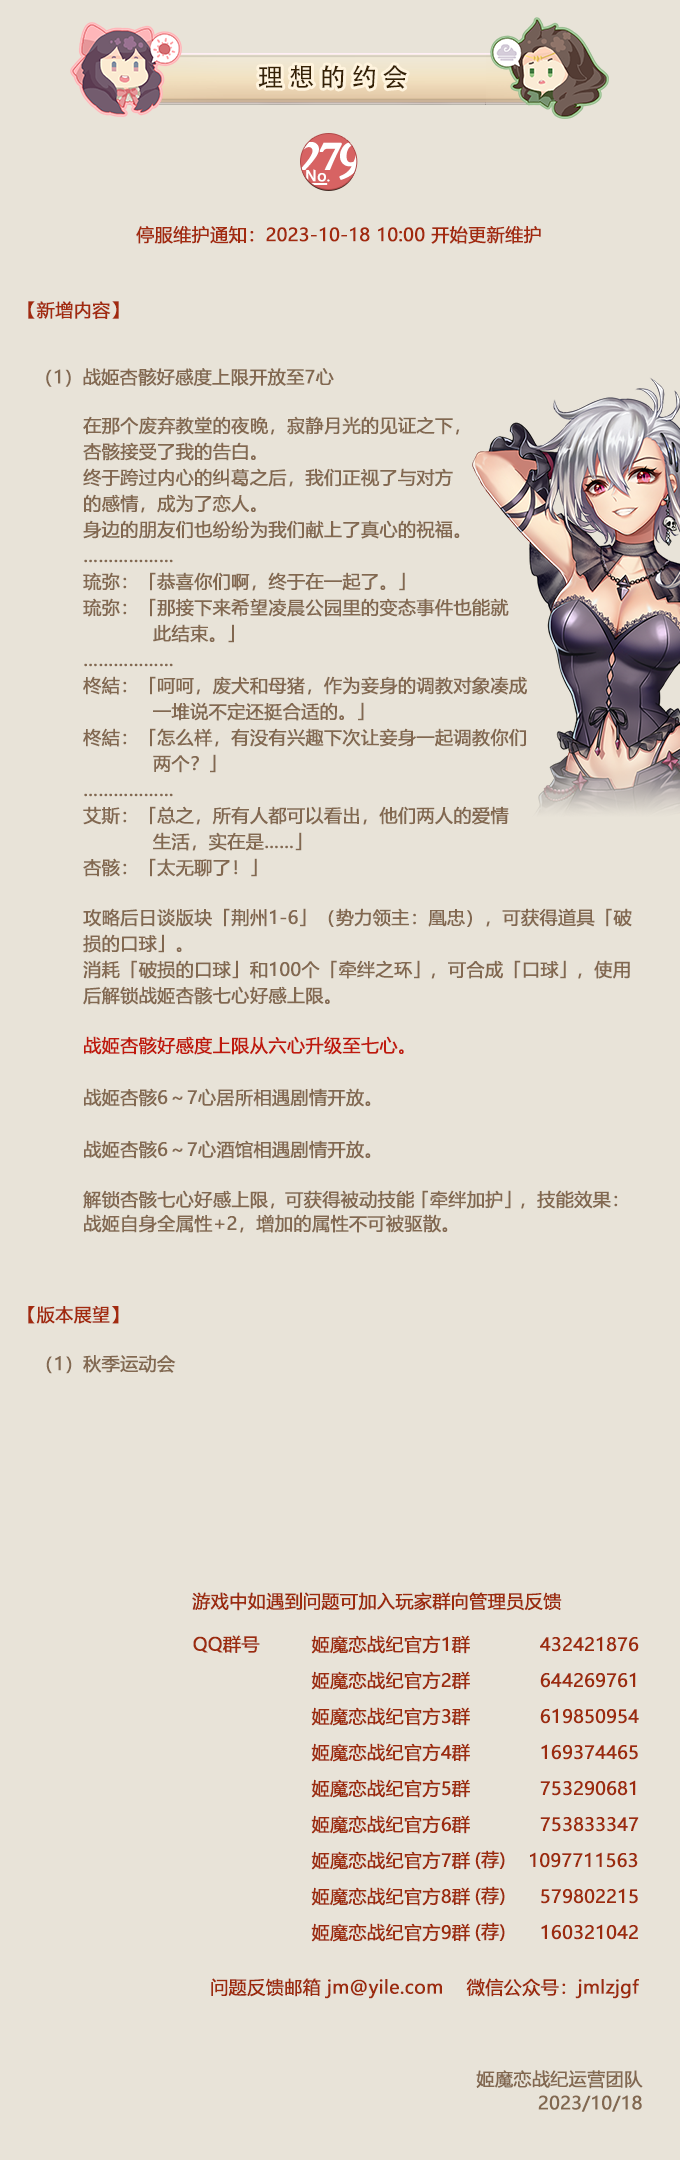 NO.279 理想的约会《姬魔恋战纪》10月18日更新公告